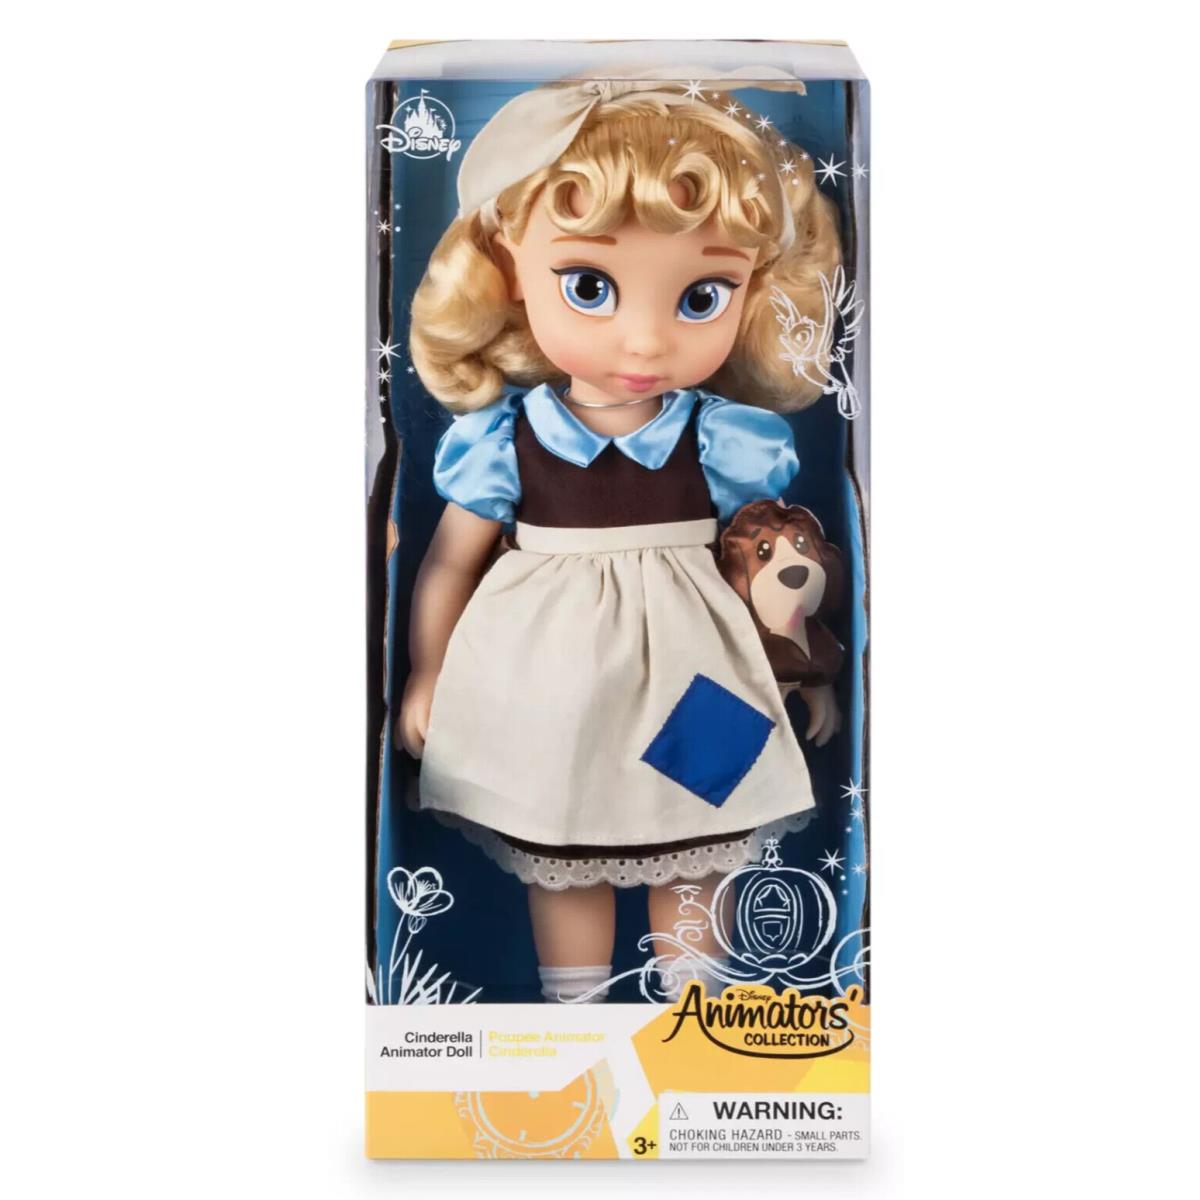 Disney Animators Collection Cinderella Doll with Plush Friend Bruno